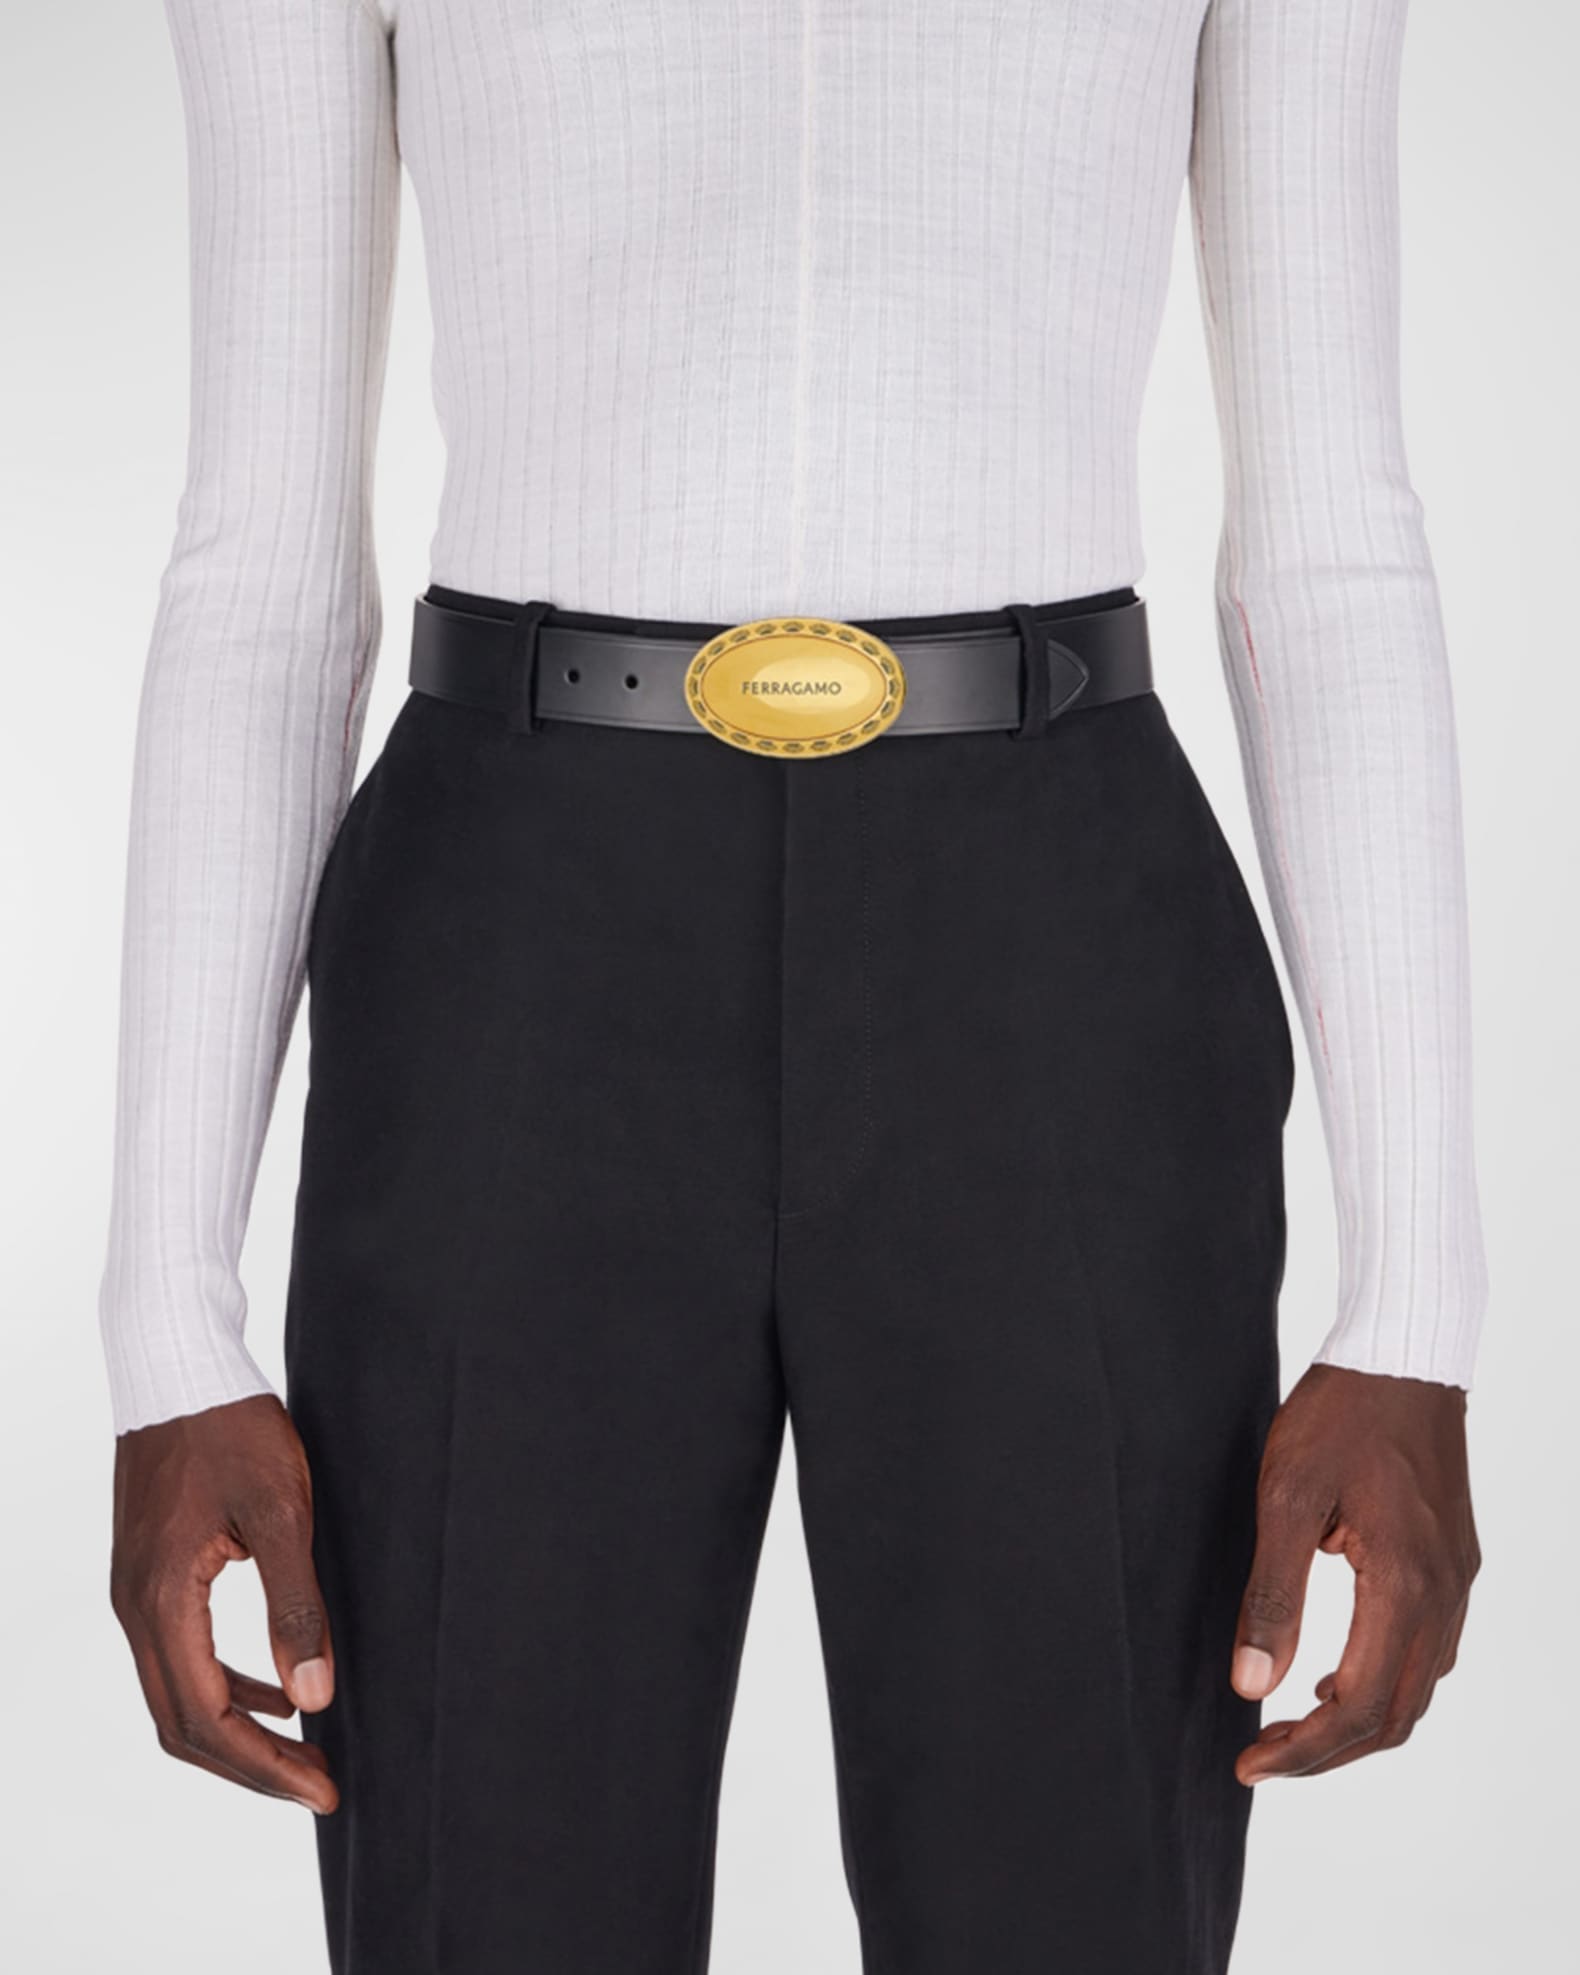 Ferragamo Men's Oval Buckle Leather Belt | Neiman Marcus